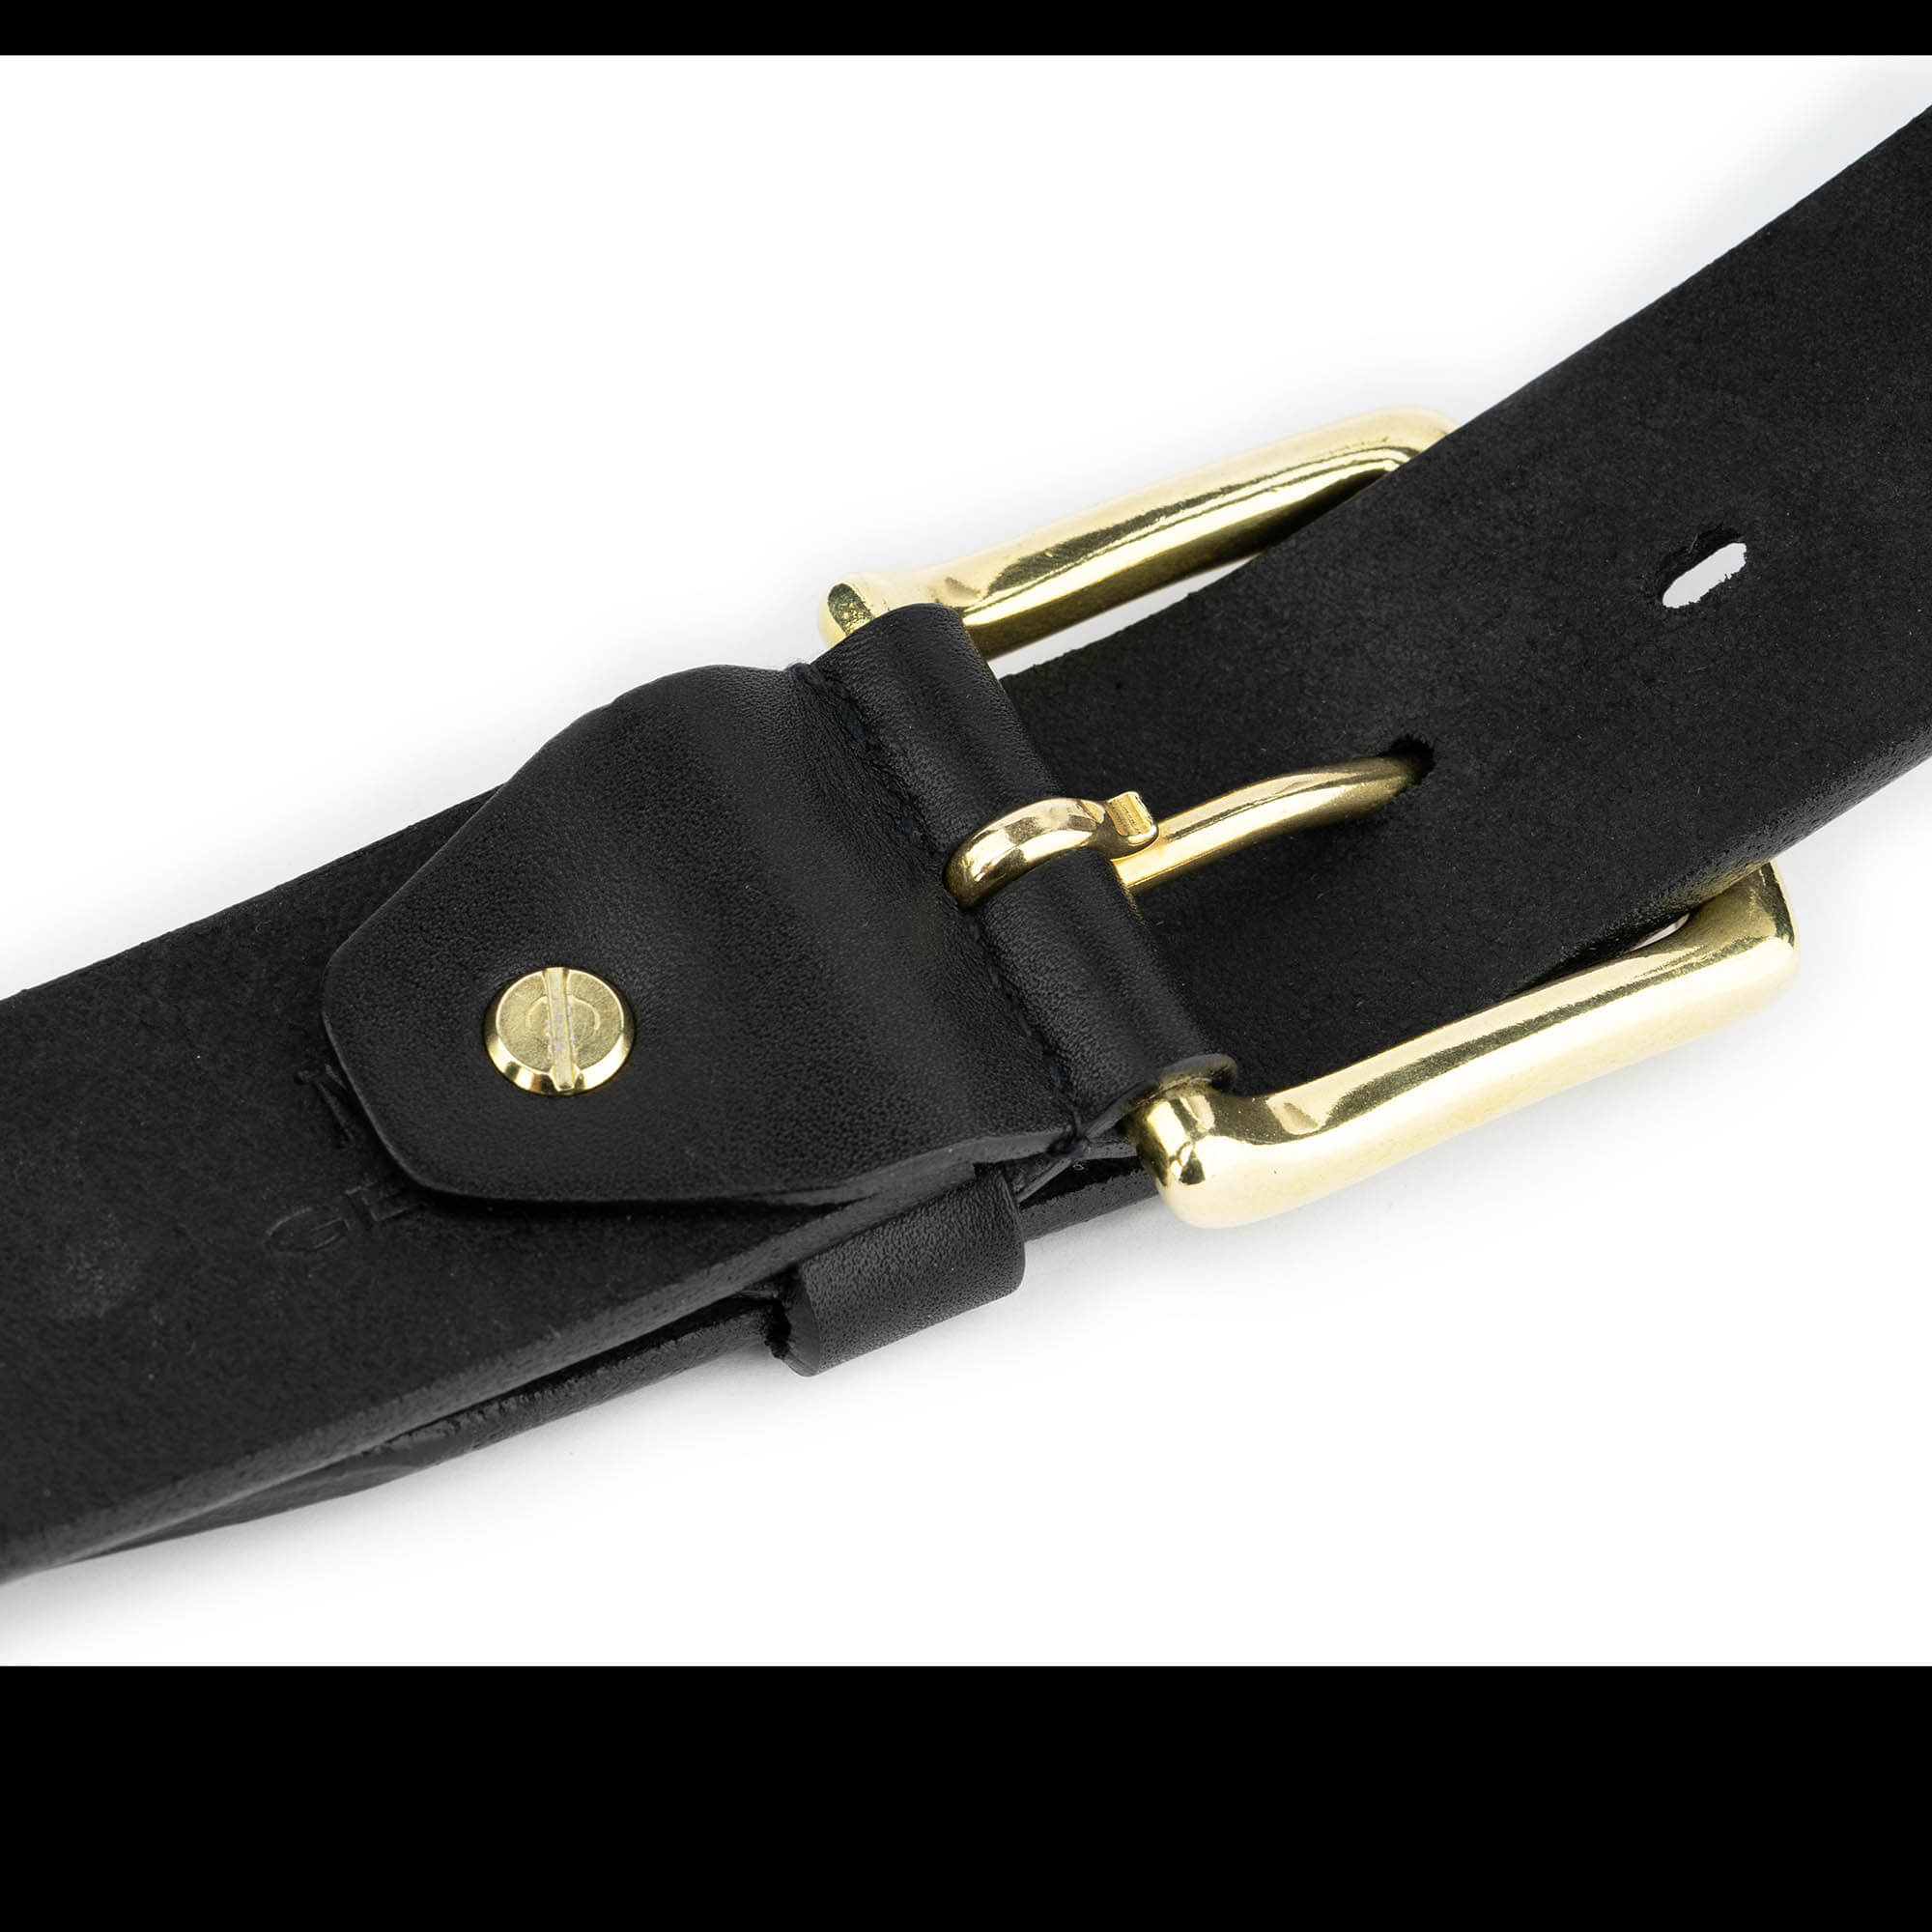 https://leatherbeltsonline.com/wp-content/uploads/2022/03/black-belt-with-brass-buckle-full-grain-leather-40-mm-10.jpg